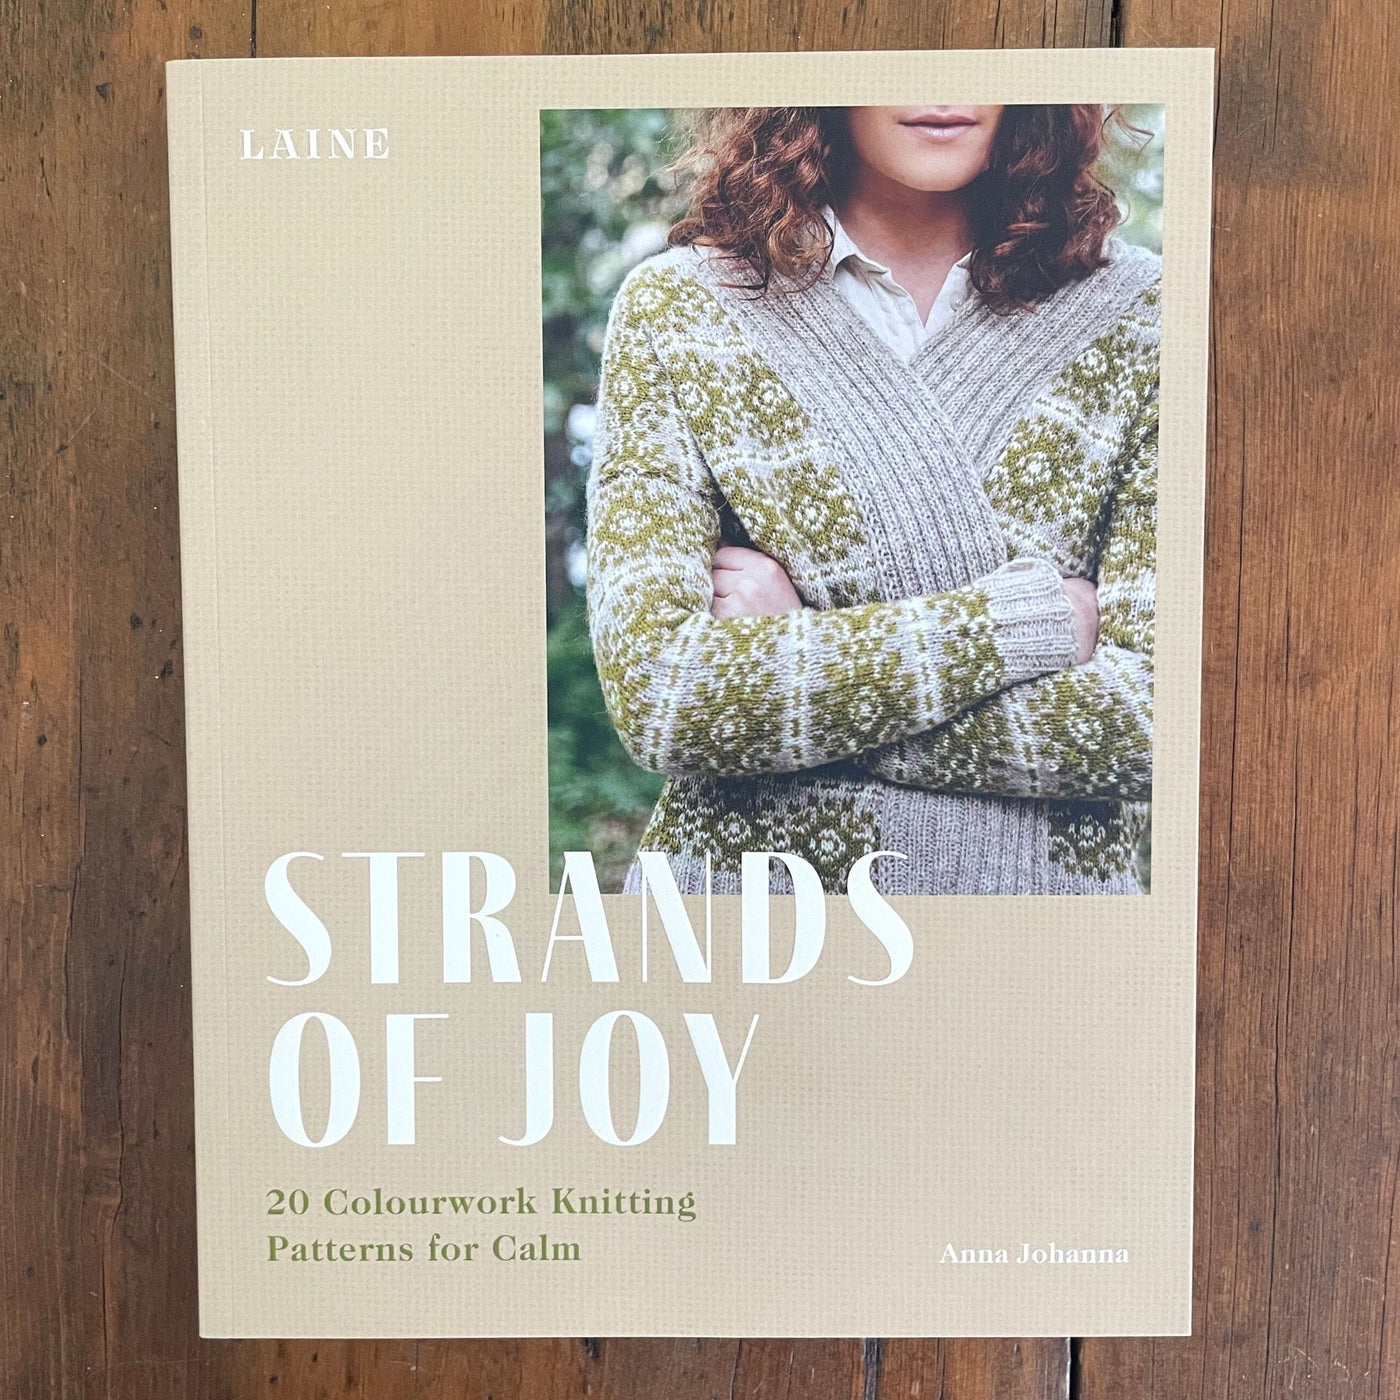 Strands of Joy book cover